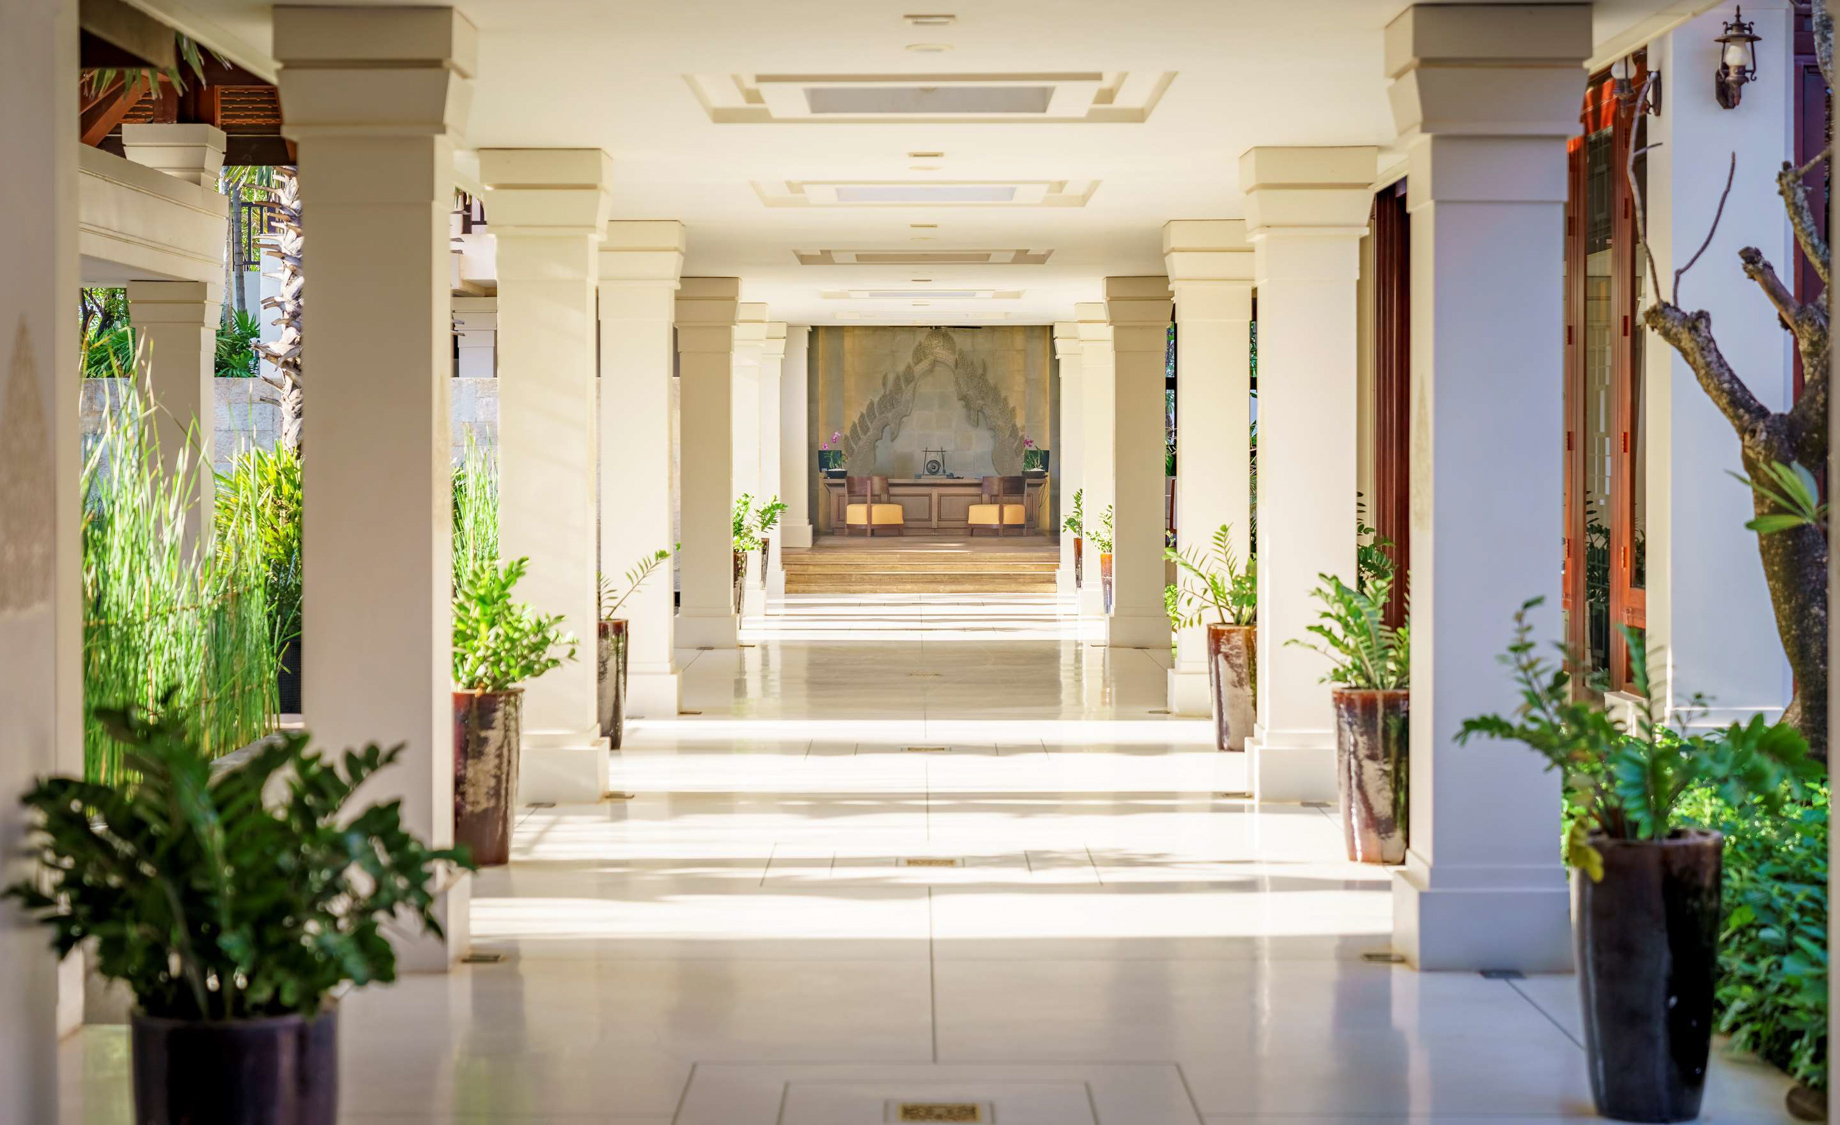 Anantara Angkor Resort – Siem Reap, Cambodia – Lobby Entrance